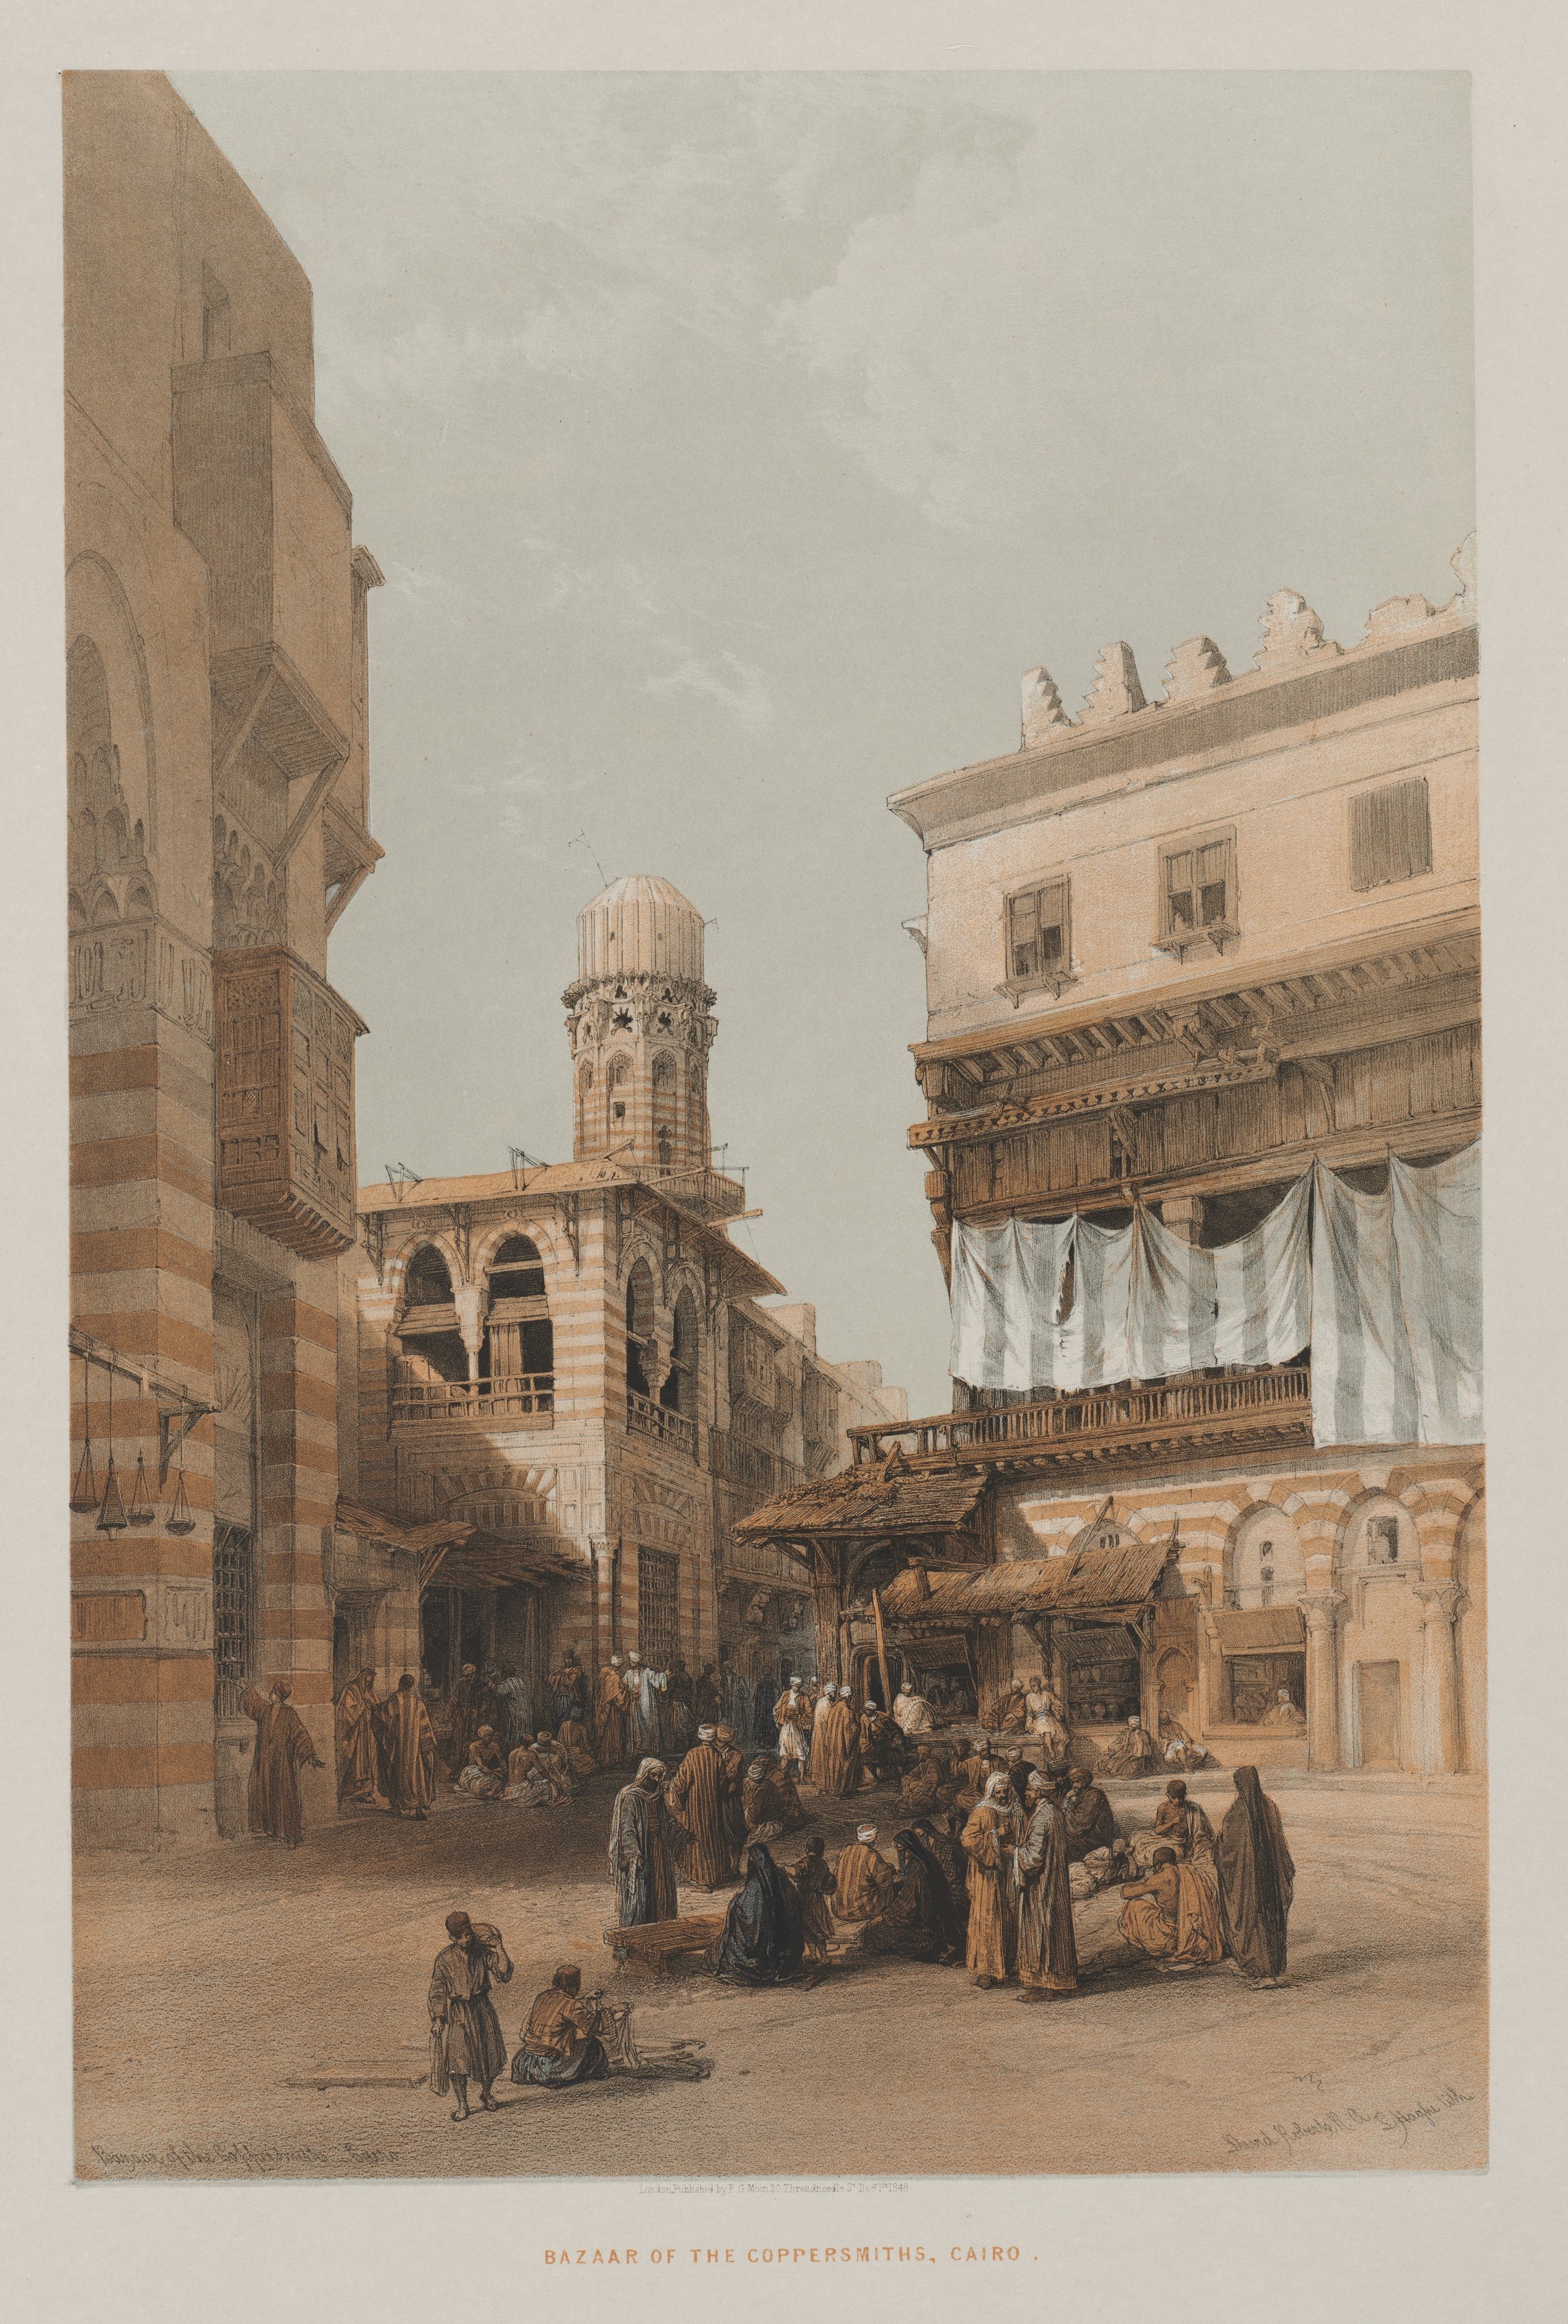 Egypt and Nubia, Volume III: Bazaar of the Coppersmiths, Cairo